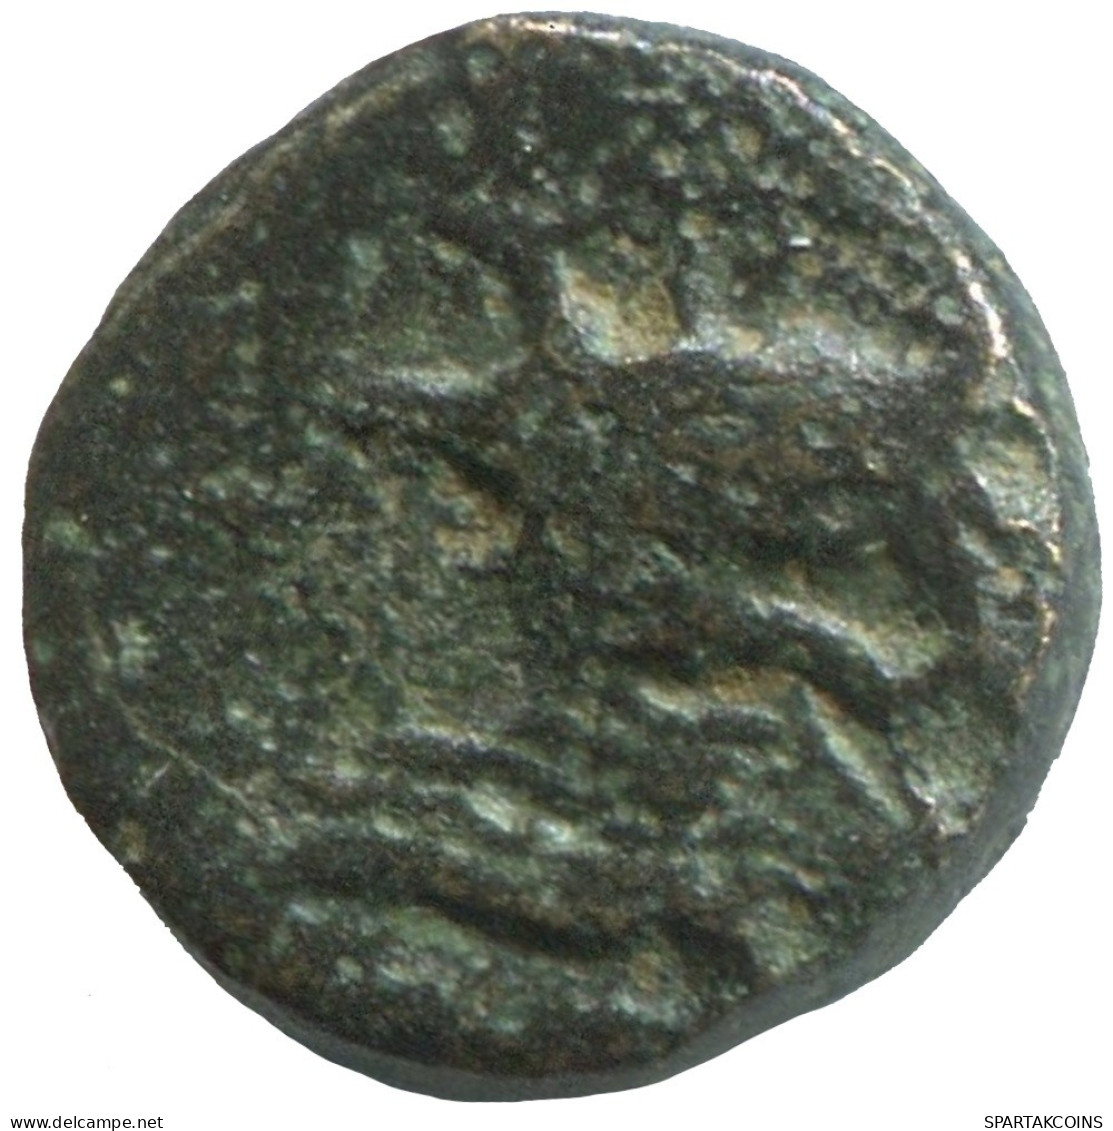 Ancient Antike Authentische Original GRIECHISCHE Münze 1.3g/10mm #SAV1319.11.D.A - Griekenland